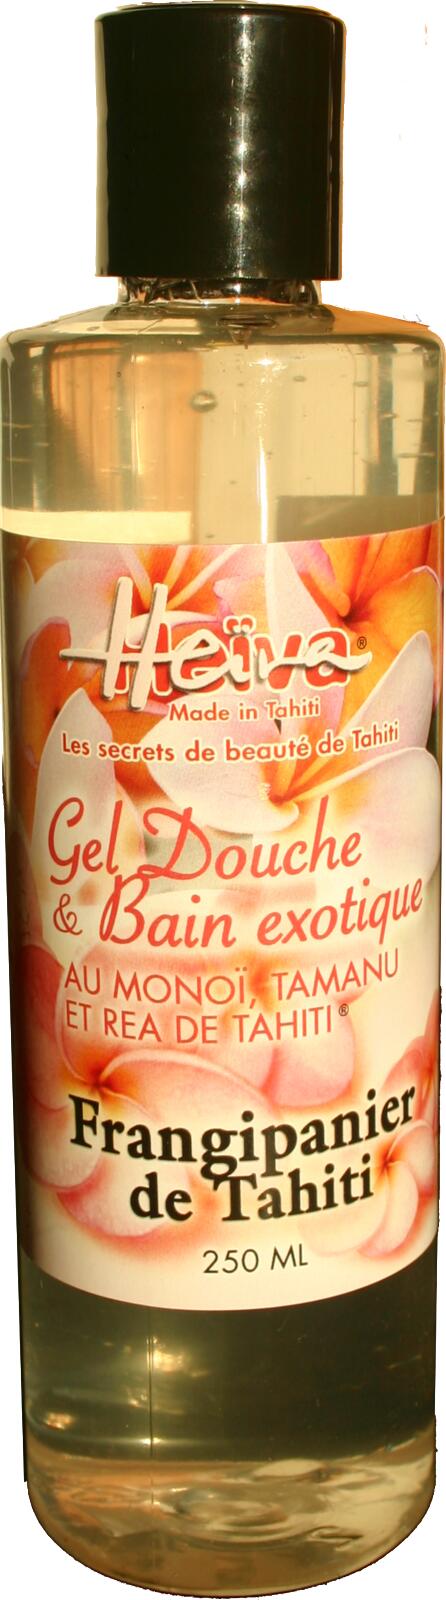 Shower Gel with Tahiti Monoi Oil and Frangipani fragrance 8.5oz